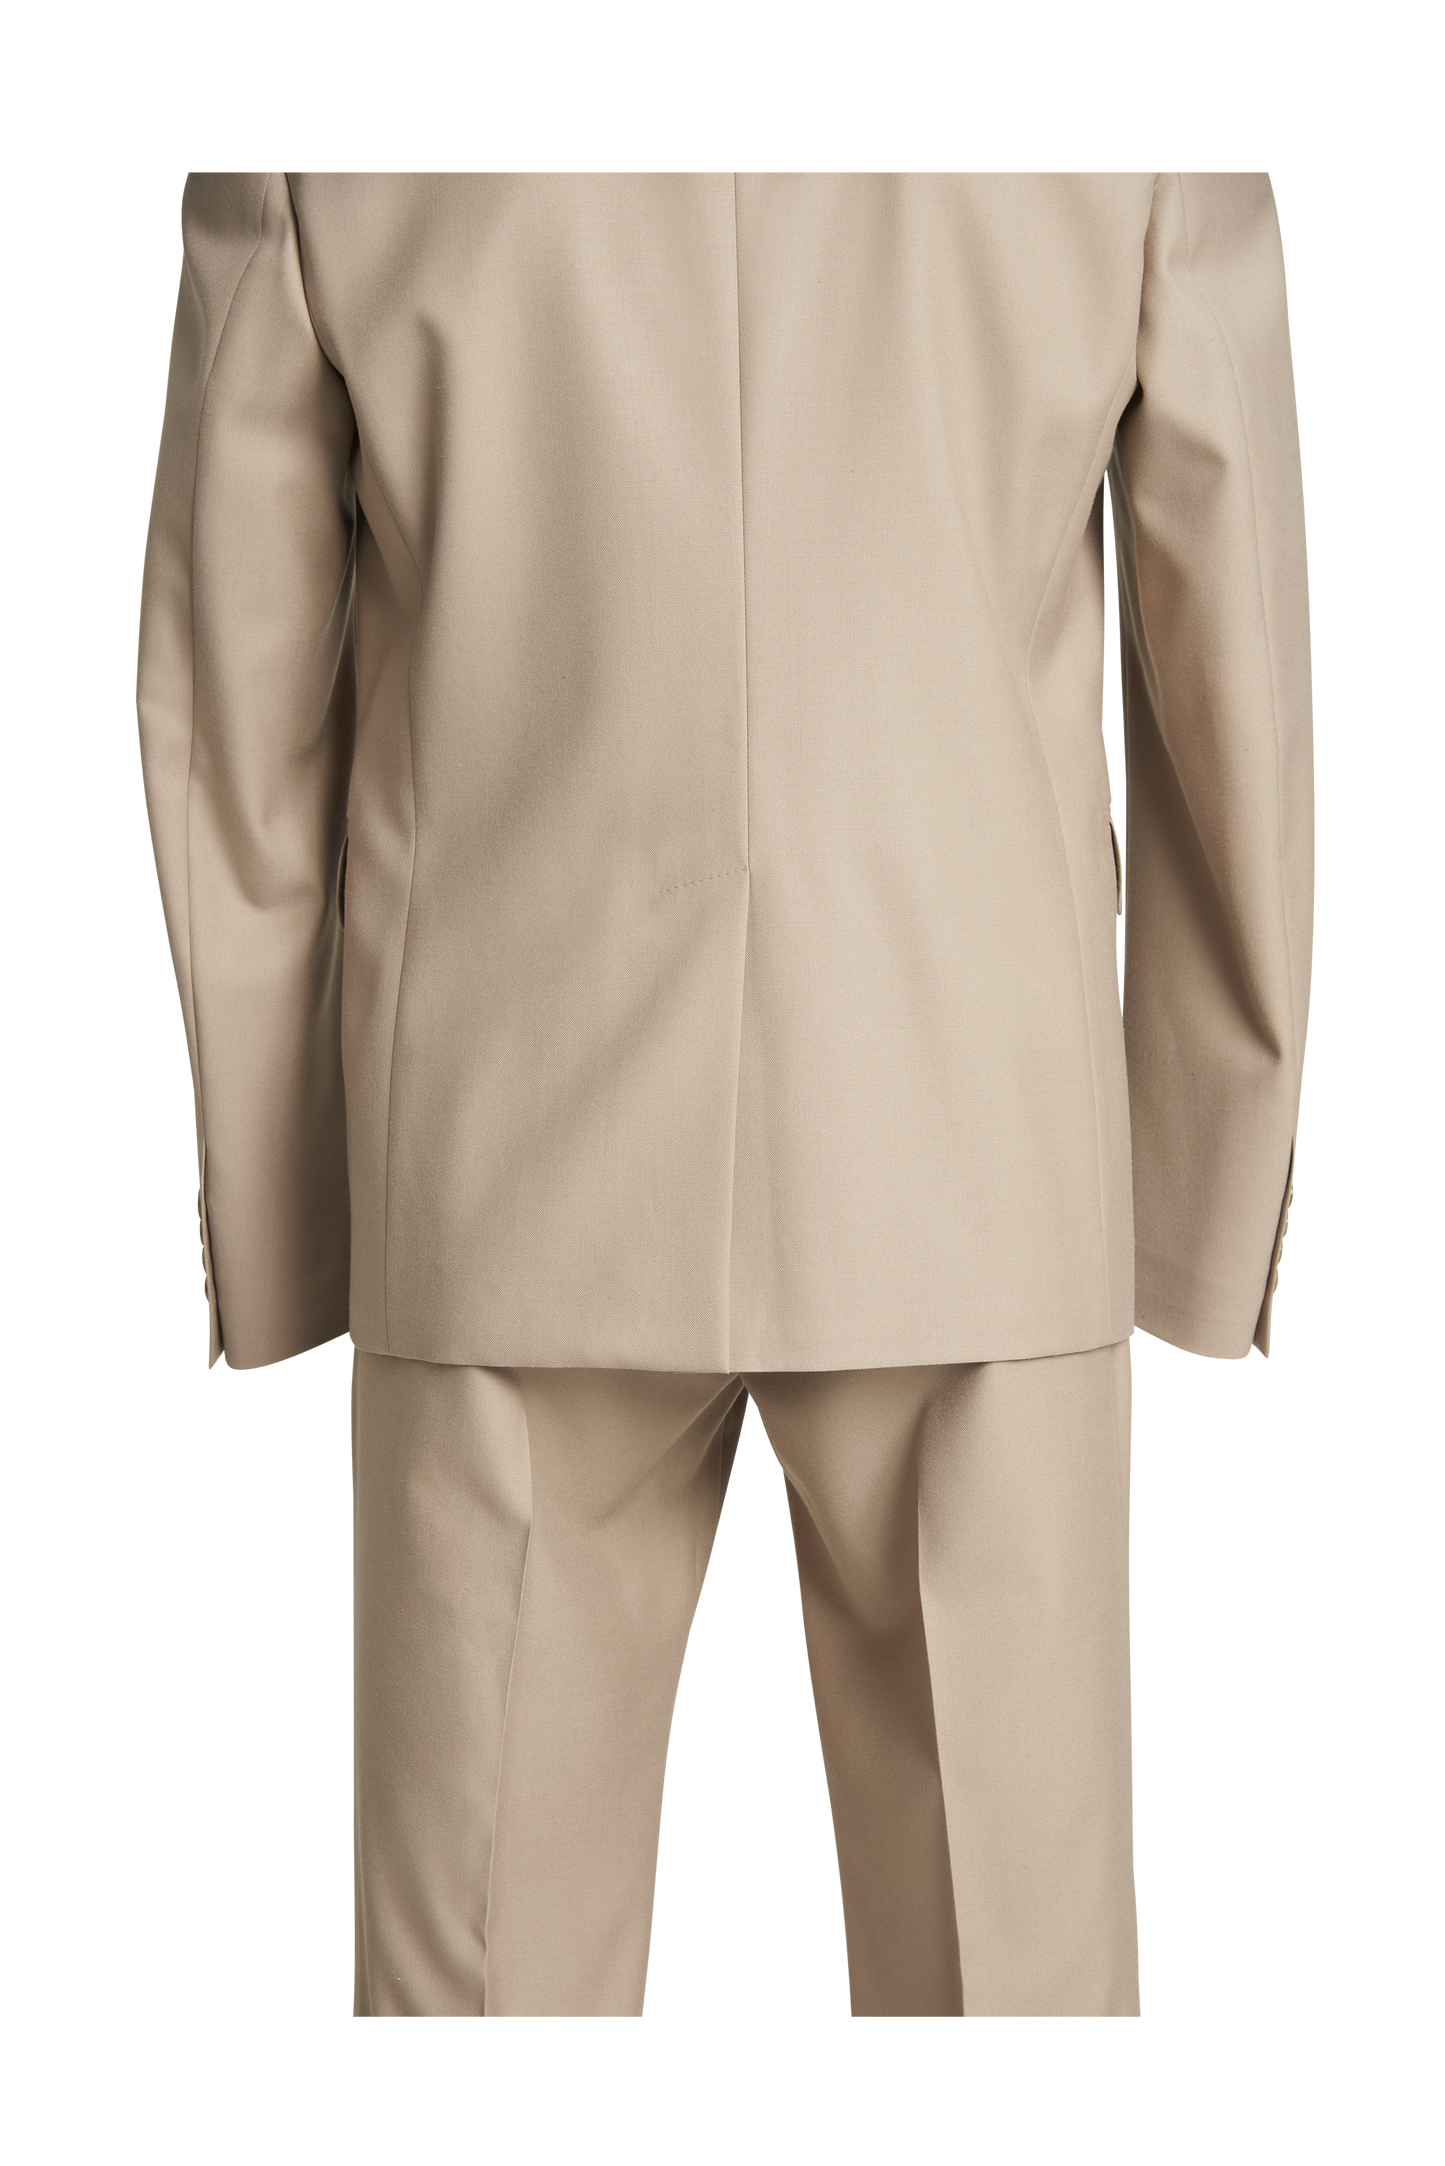 <span>Slim Short Line Suit</span><br>tex No. 14600 / HM / セットアップ</span>